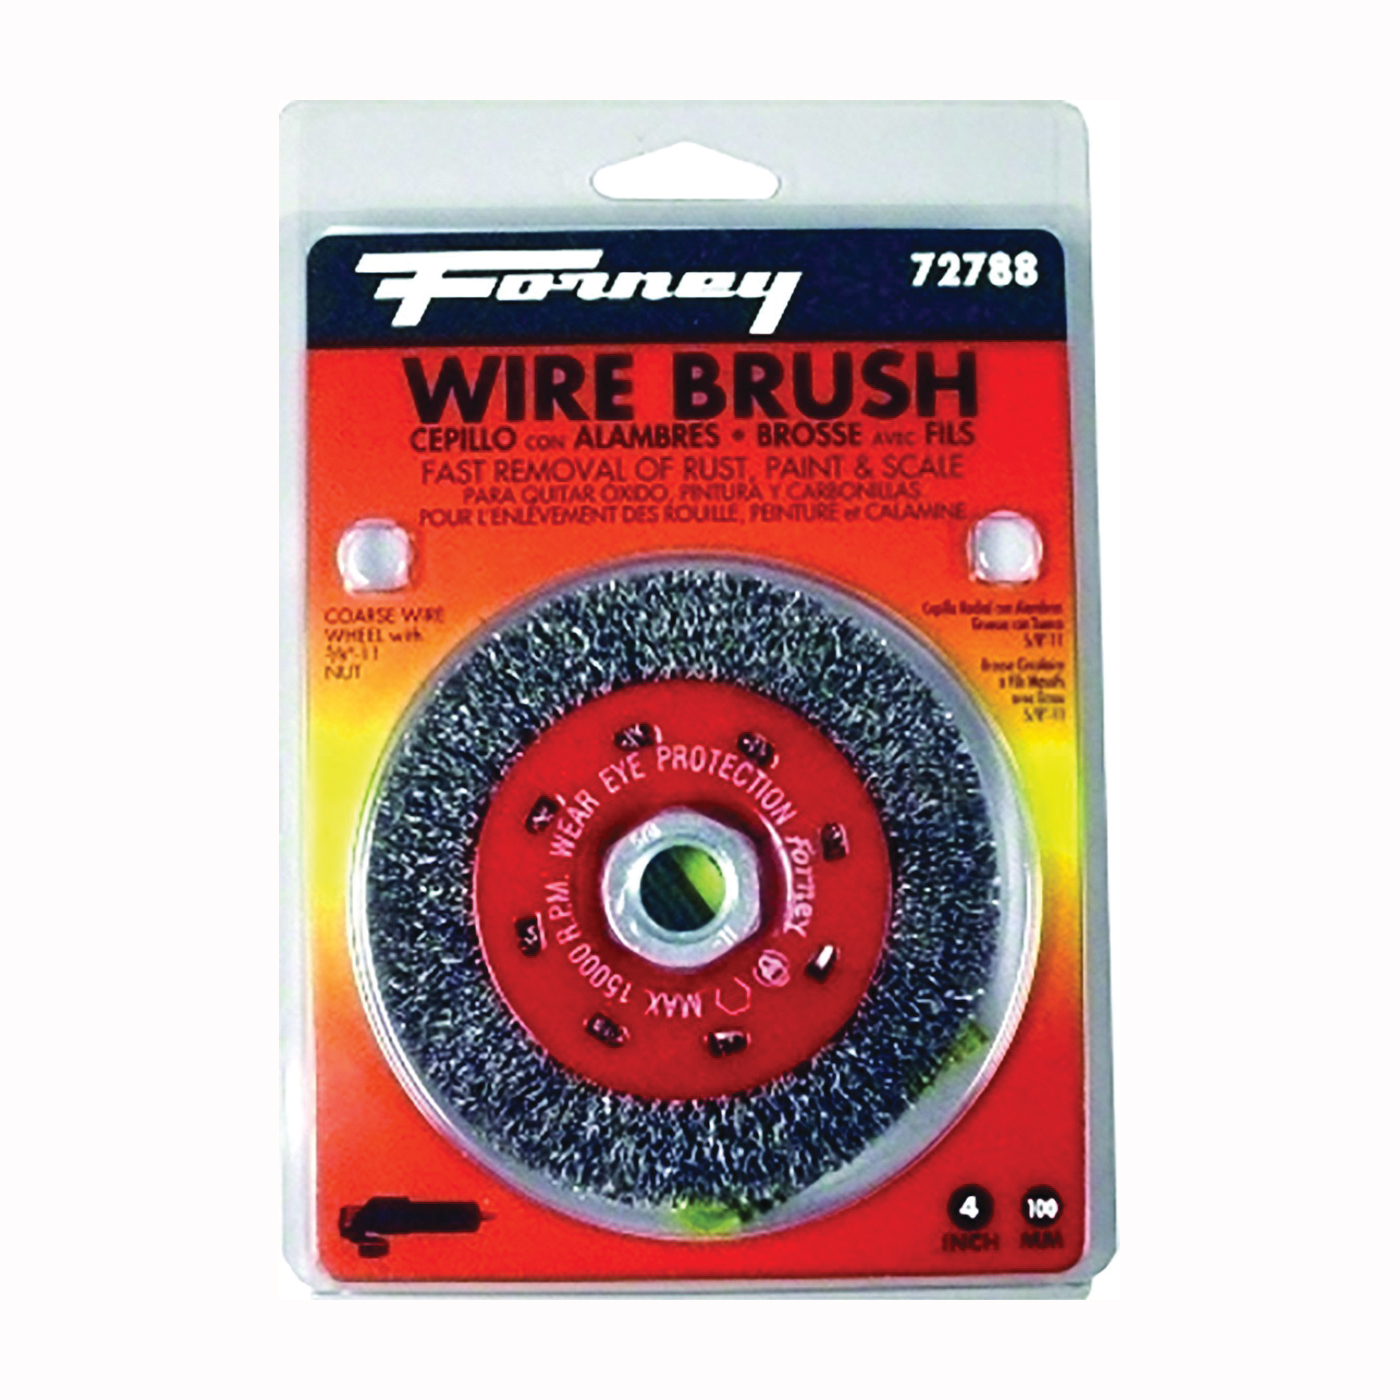 72788 Wire Wheel Brush, 4 in Dia, 5/8-11 Arbor/Shank, 0.012 in Dia Bristle, Carbon Steel Bristle